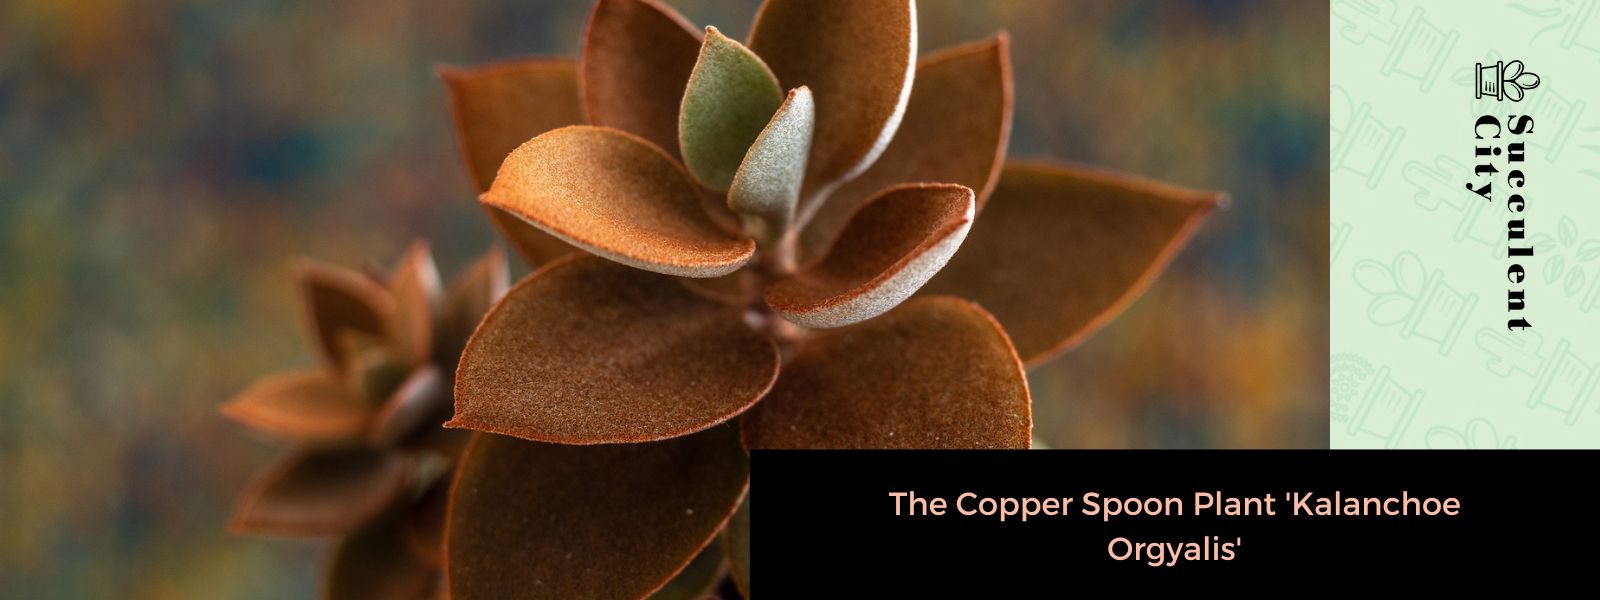 La planta cuchara de cobre 'Kalanchoe Orgyalis'